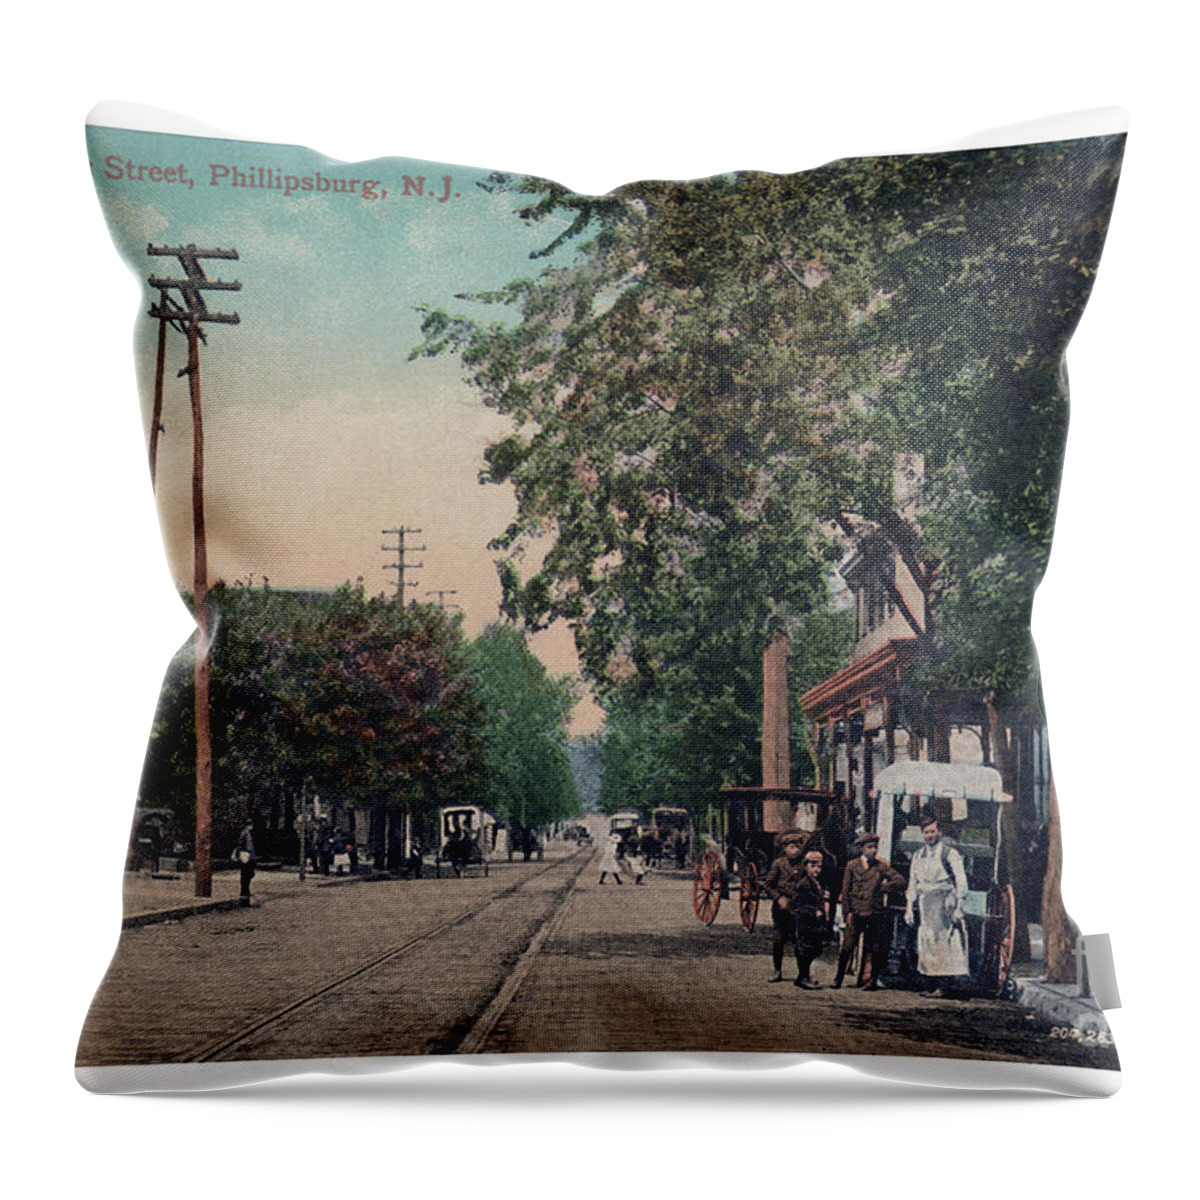 Phillipsburg Throw Pillow featuring the photograph South Main Street Phillipsburg N J by Mark Miller